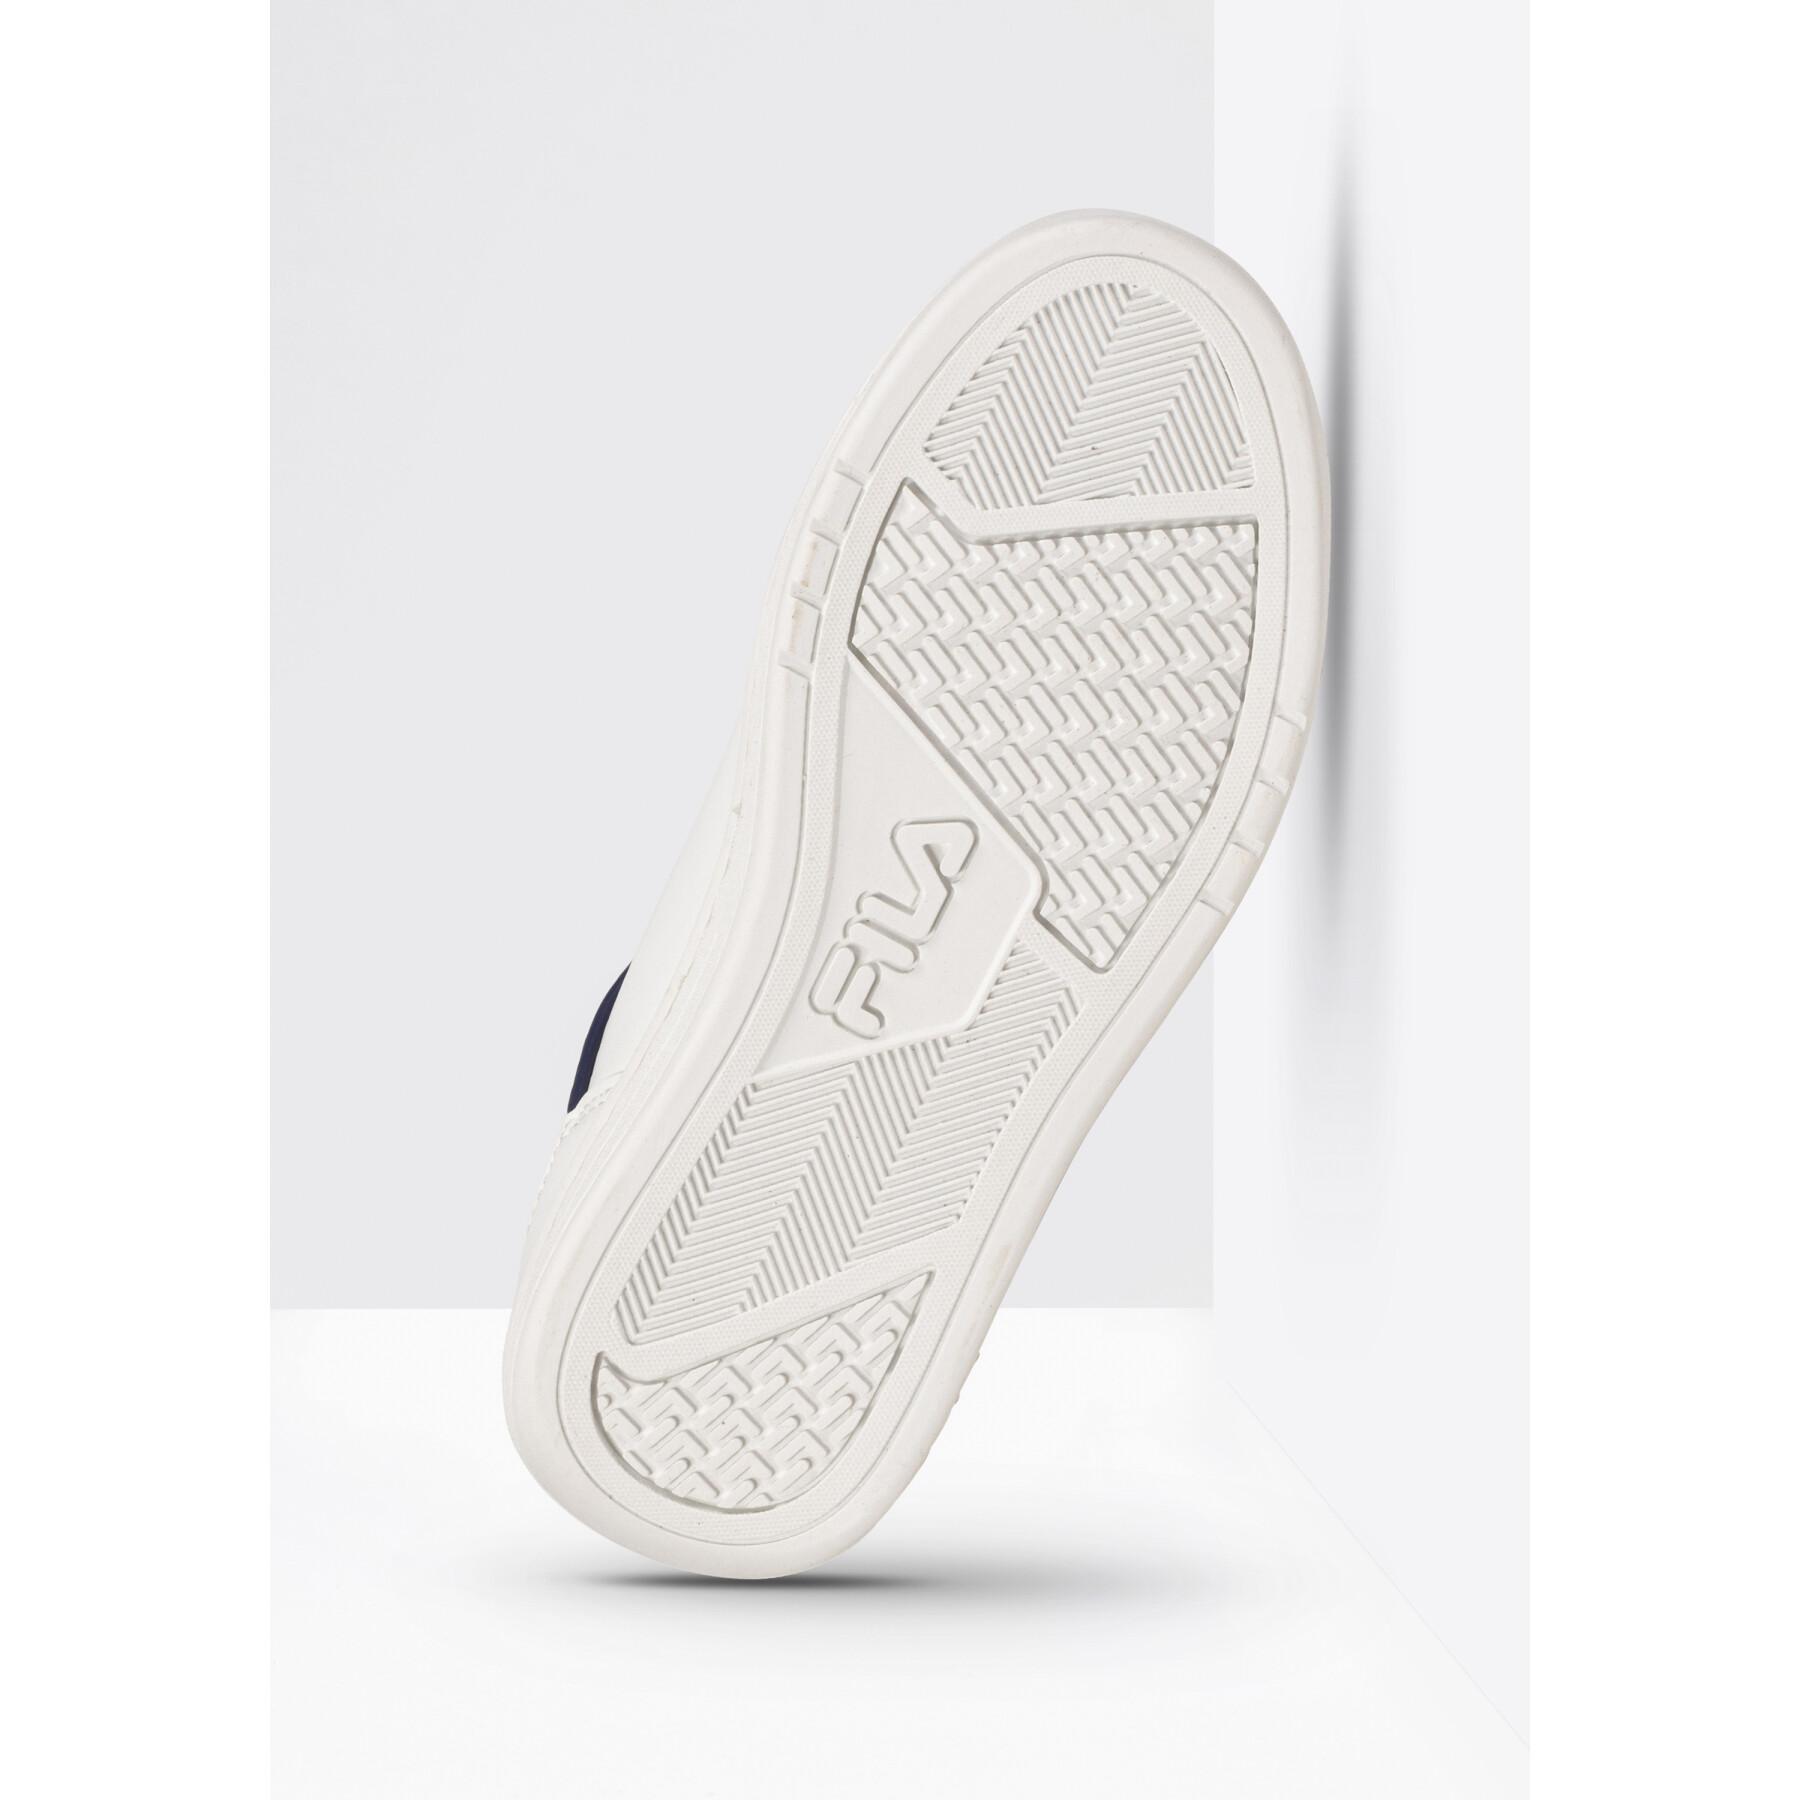 Velcro sneakers for kids Fila C.Court - Fila - Brands - Lifestyle